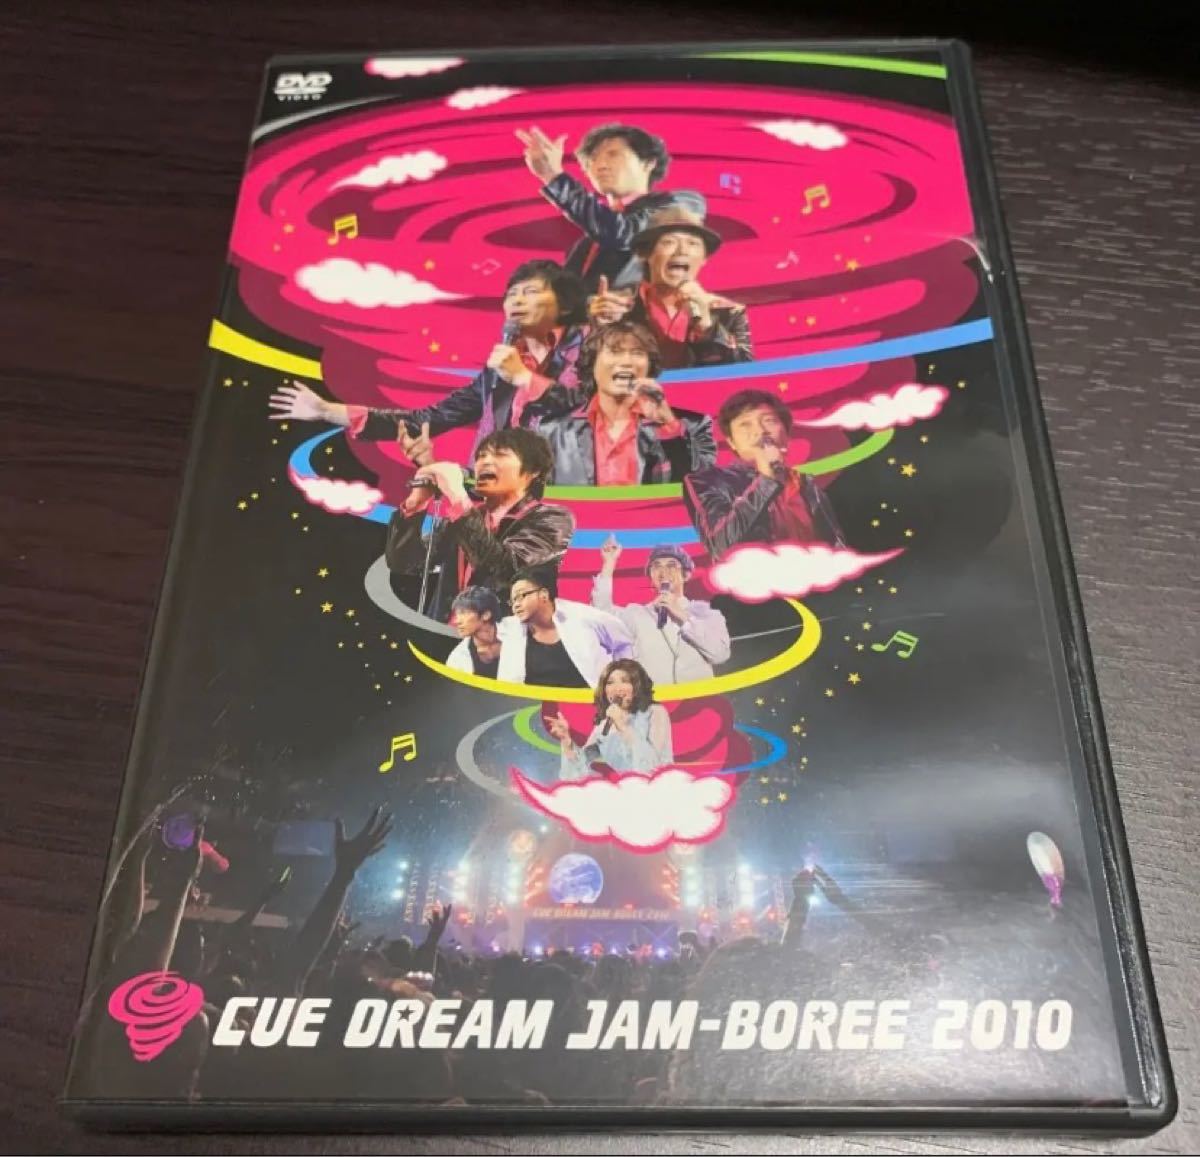 CUE DREAM JAM-BOREE 2010　DVD 大泉洋 安田顕 戸次重幸 森崎博之 音尾琢真